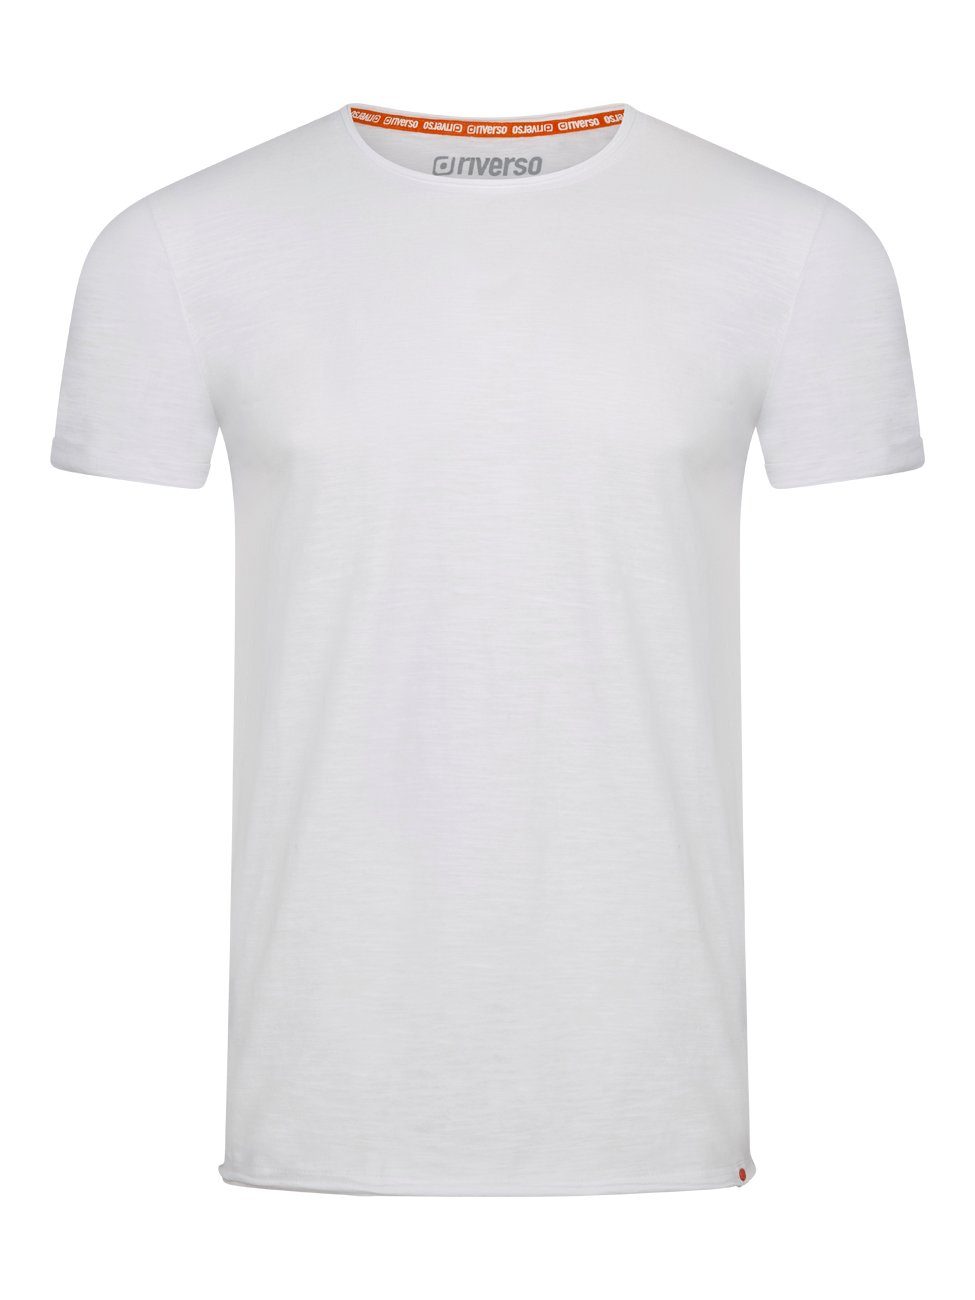 Kurzarm Shirt 100% Baumwolle RIVLenny riverso T-Shirt Rundhalsausschnitt (1-tlg) Tee Herren Shirt mit Regular aus Fit White Basic